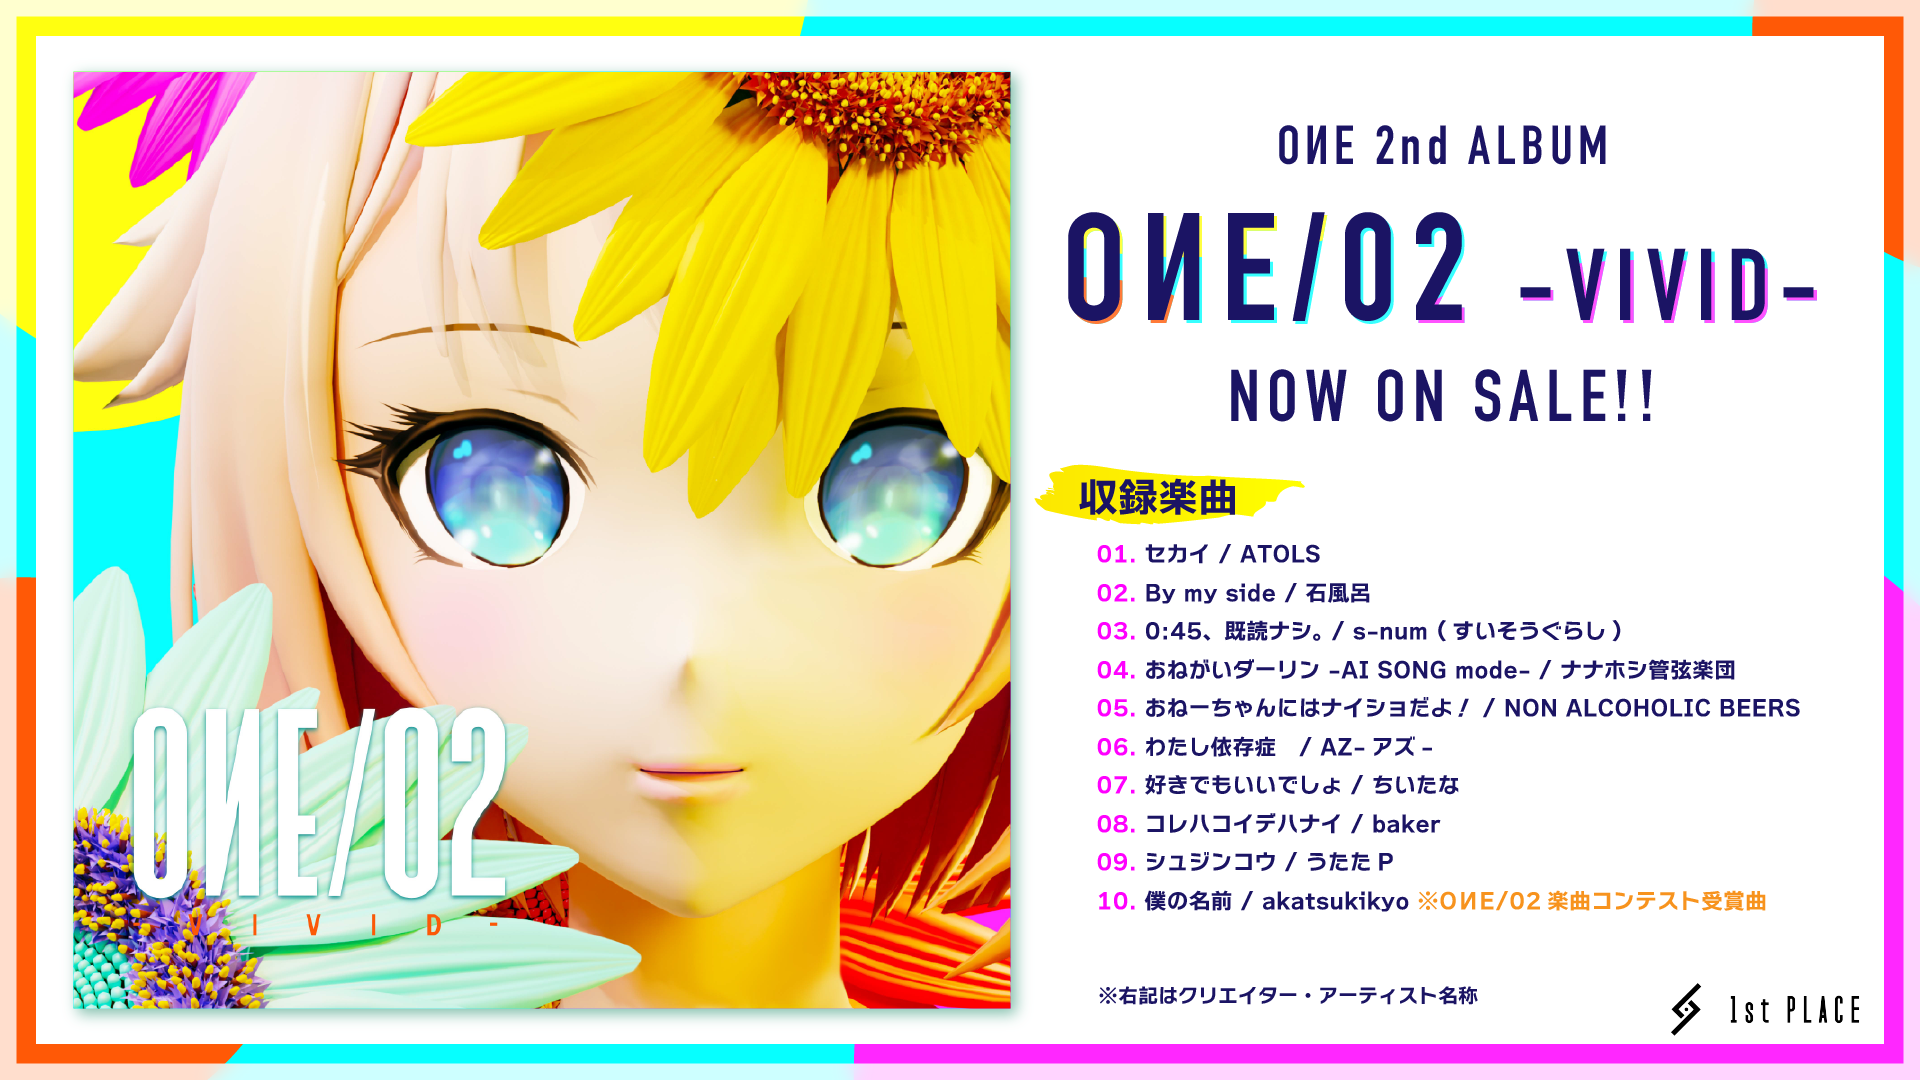 OИE待望の2nd ALBUM「OИE/02 -VIVID-」好評配信中!! YouTube / ニコニコ動画で、アルバム全曲試聴映像 公開!!